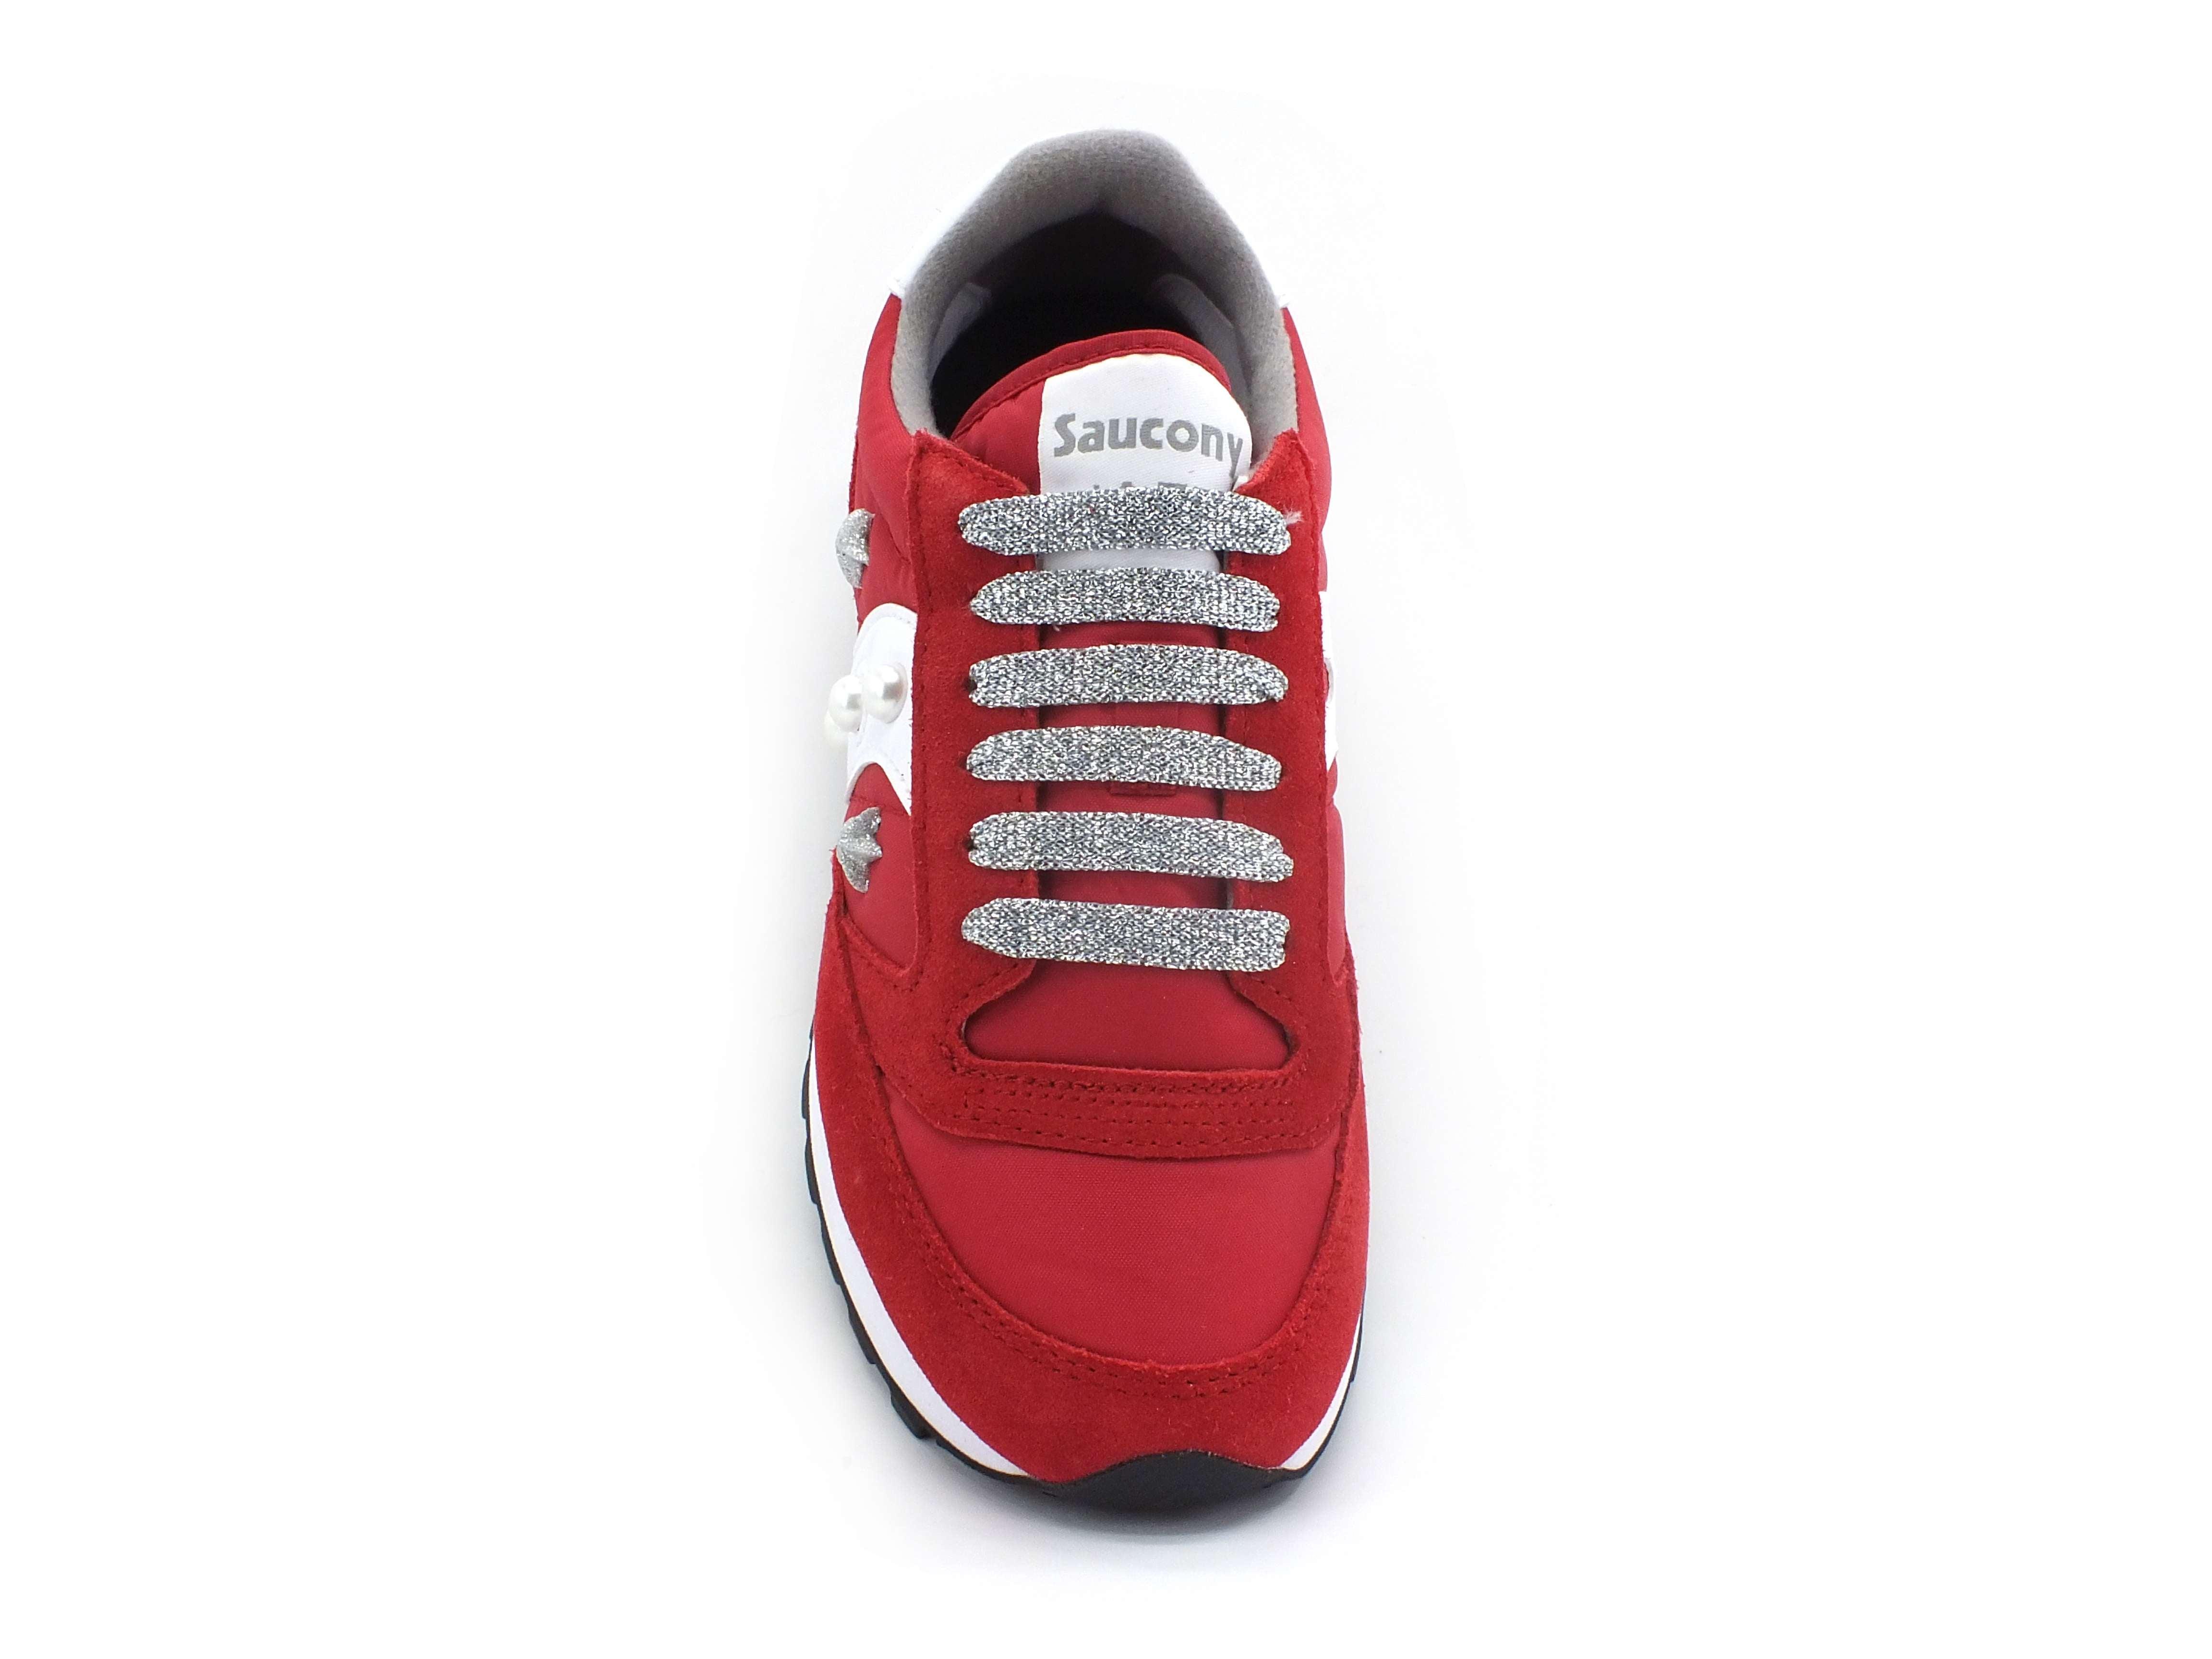 CUSTOM / SAUCONY Jazz Original Sneaker Borchie Red S2044-311 - Sandrini Calzature e Abbigliamento